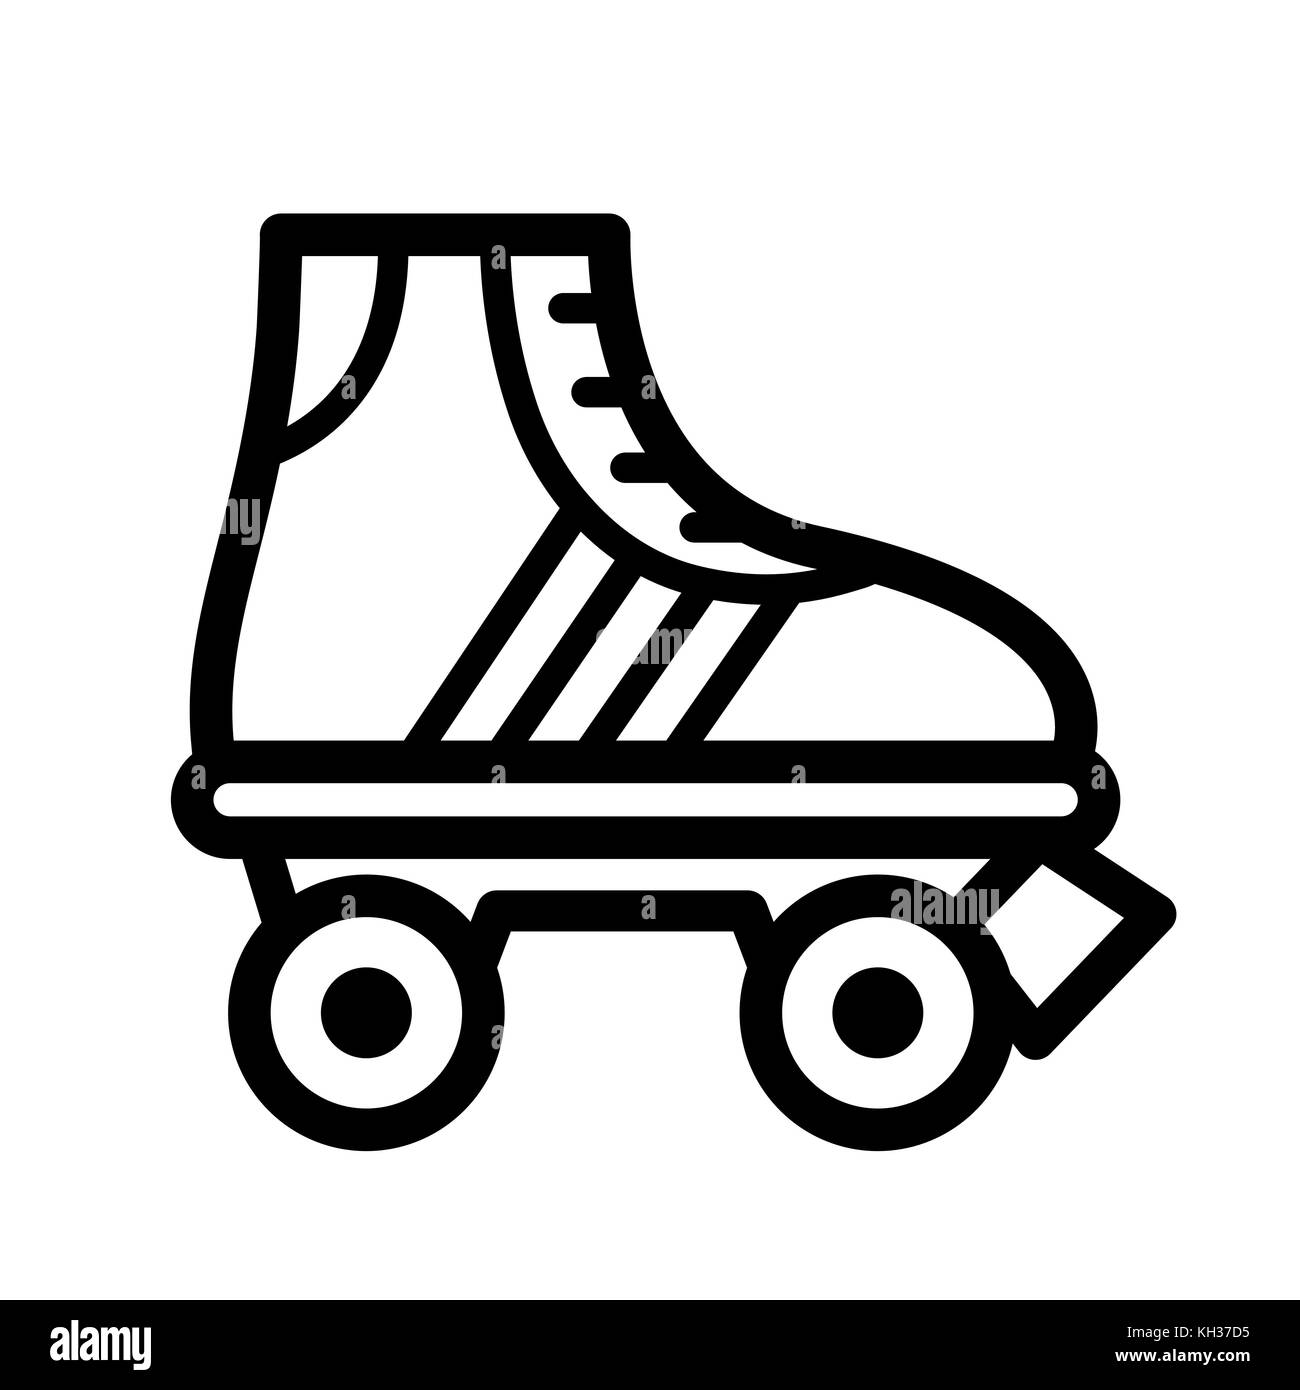 Roller skate icon - vector illustration Stock Vector